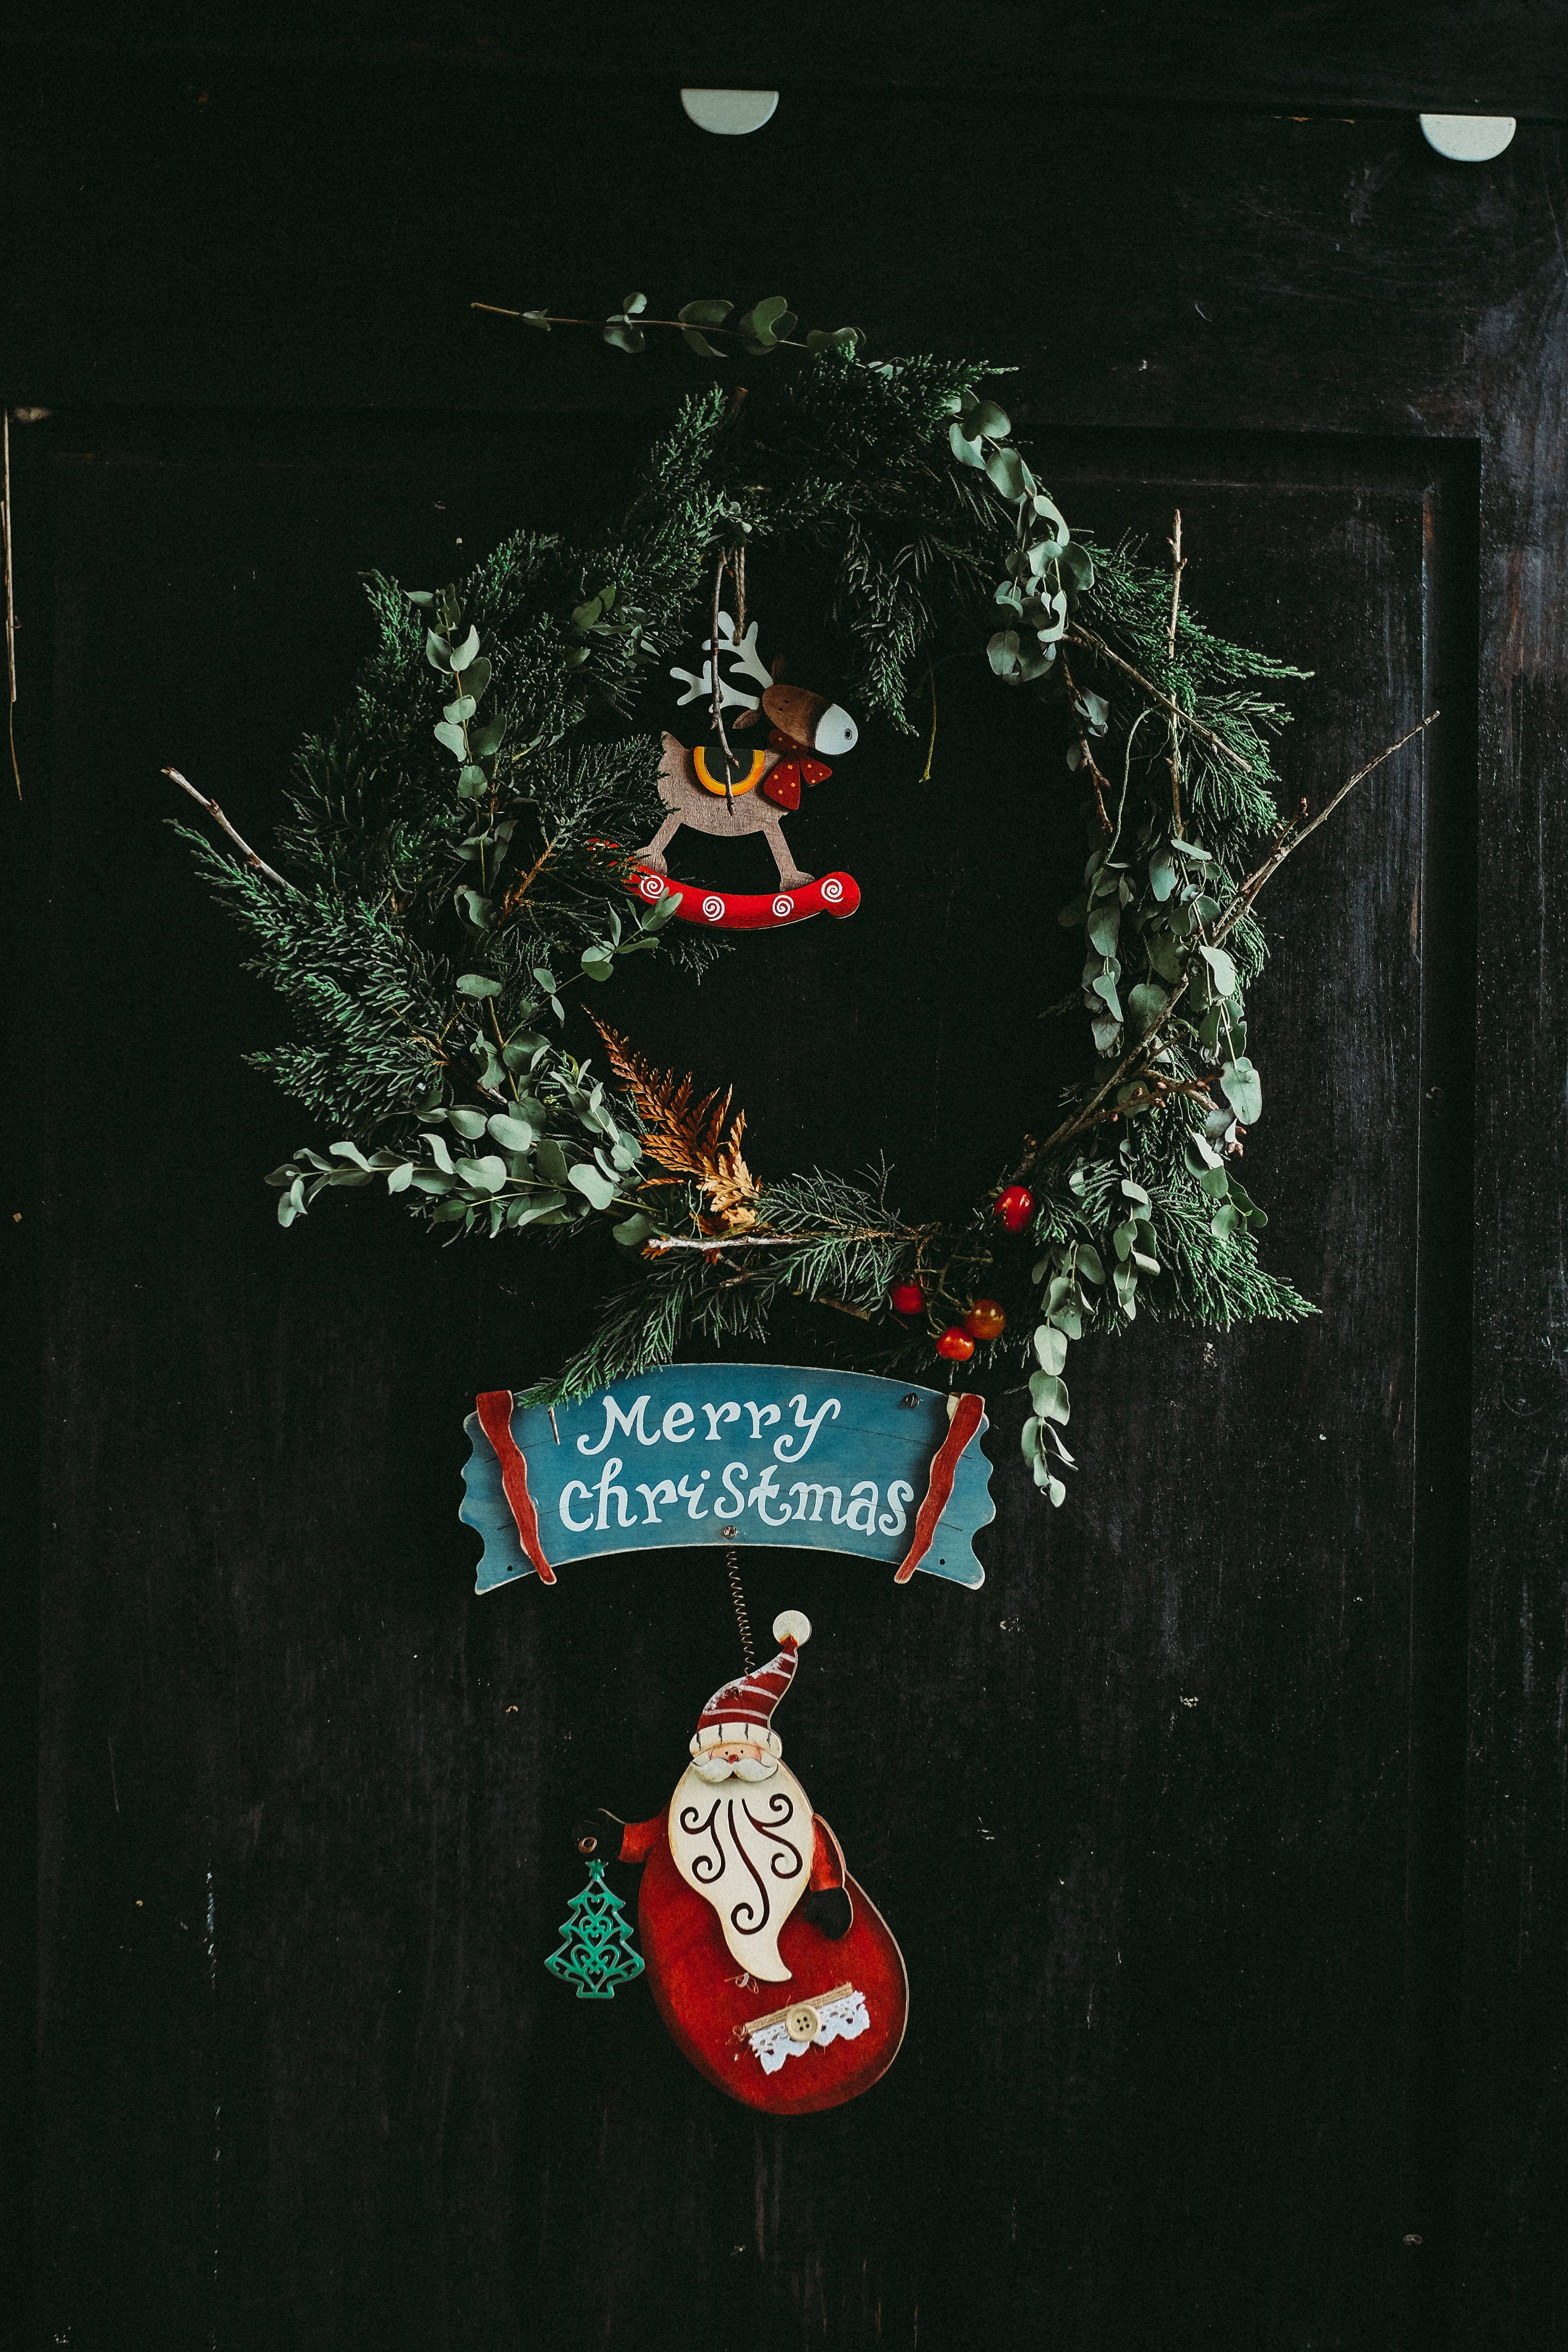 Christmas wreath with Merry Christmas inscription on the door